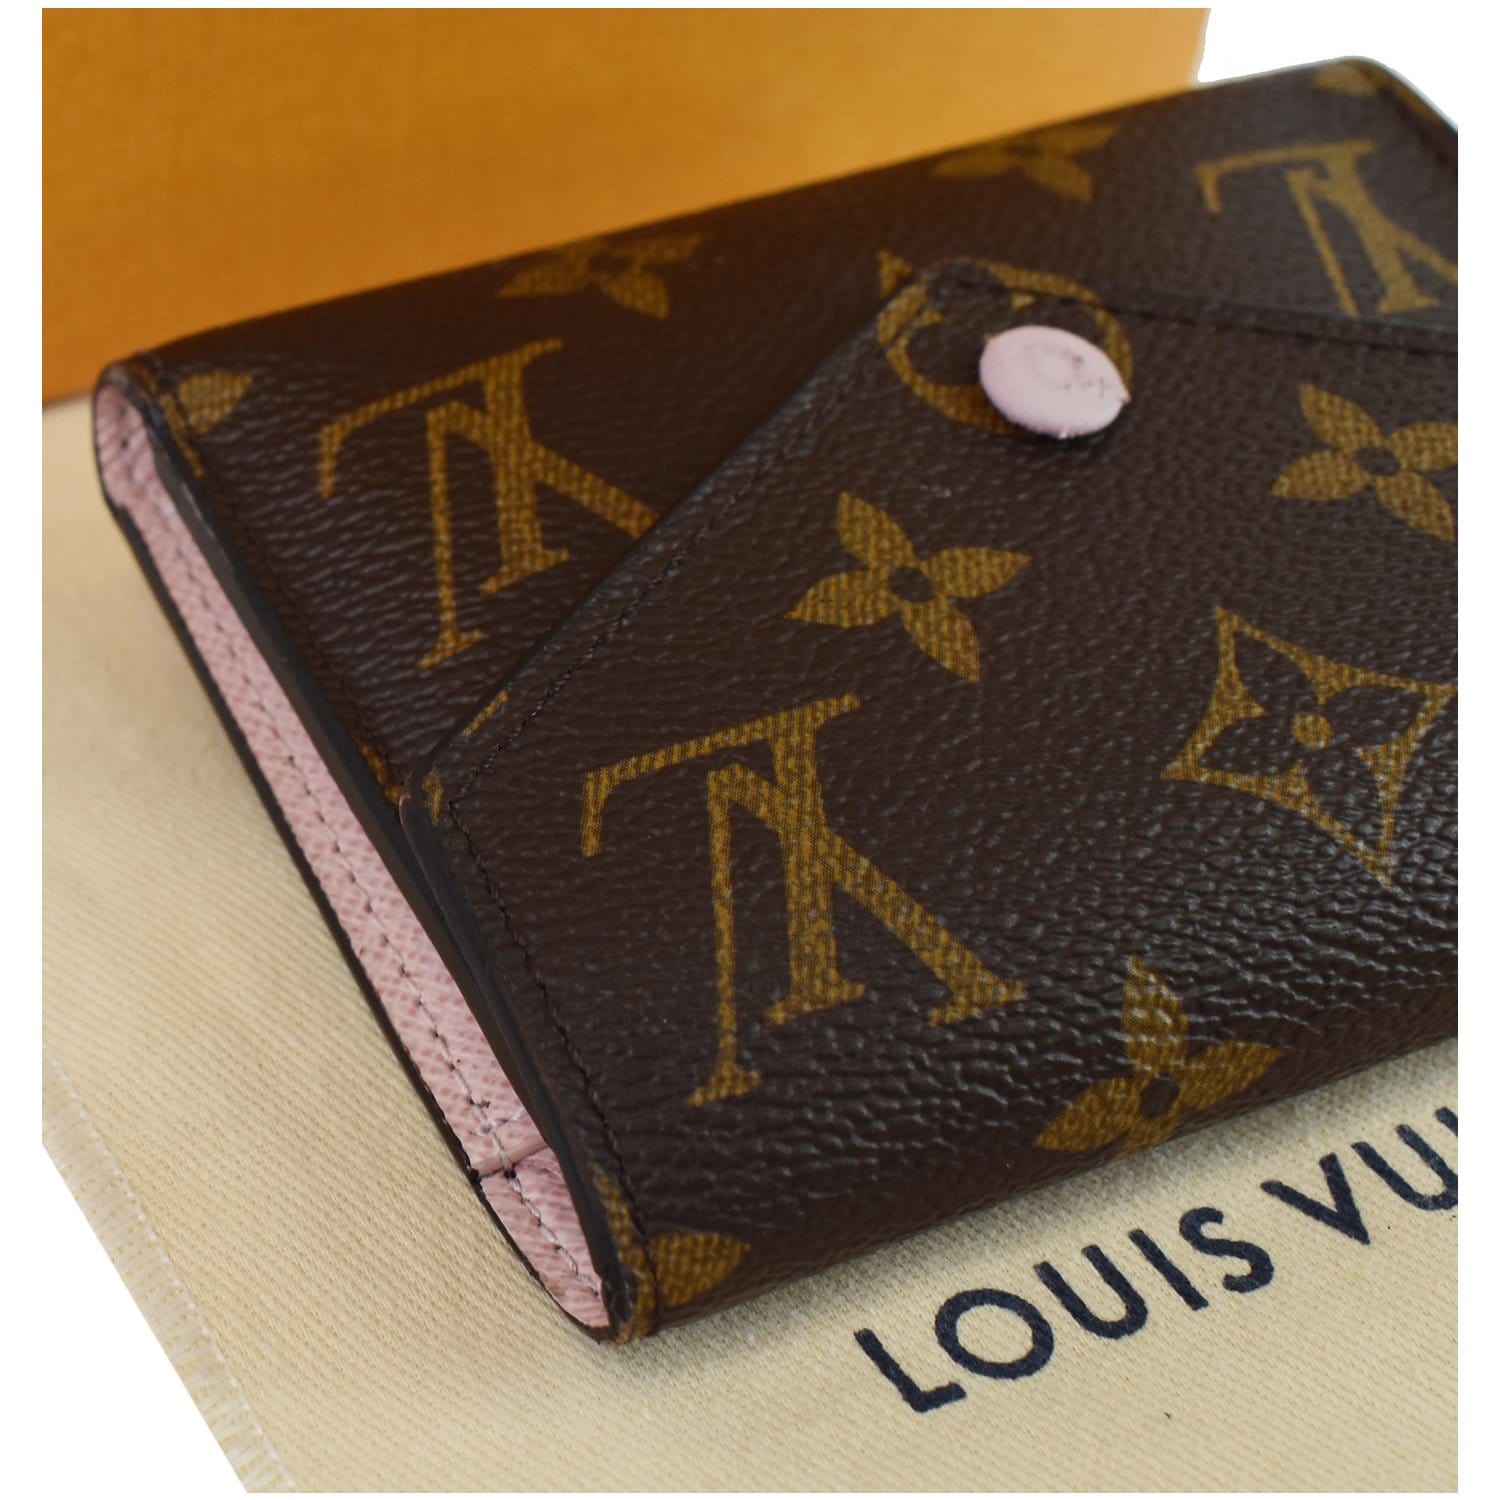 Louis Vuitton Victorine Monogram Canvas Wallet Rose